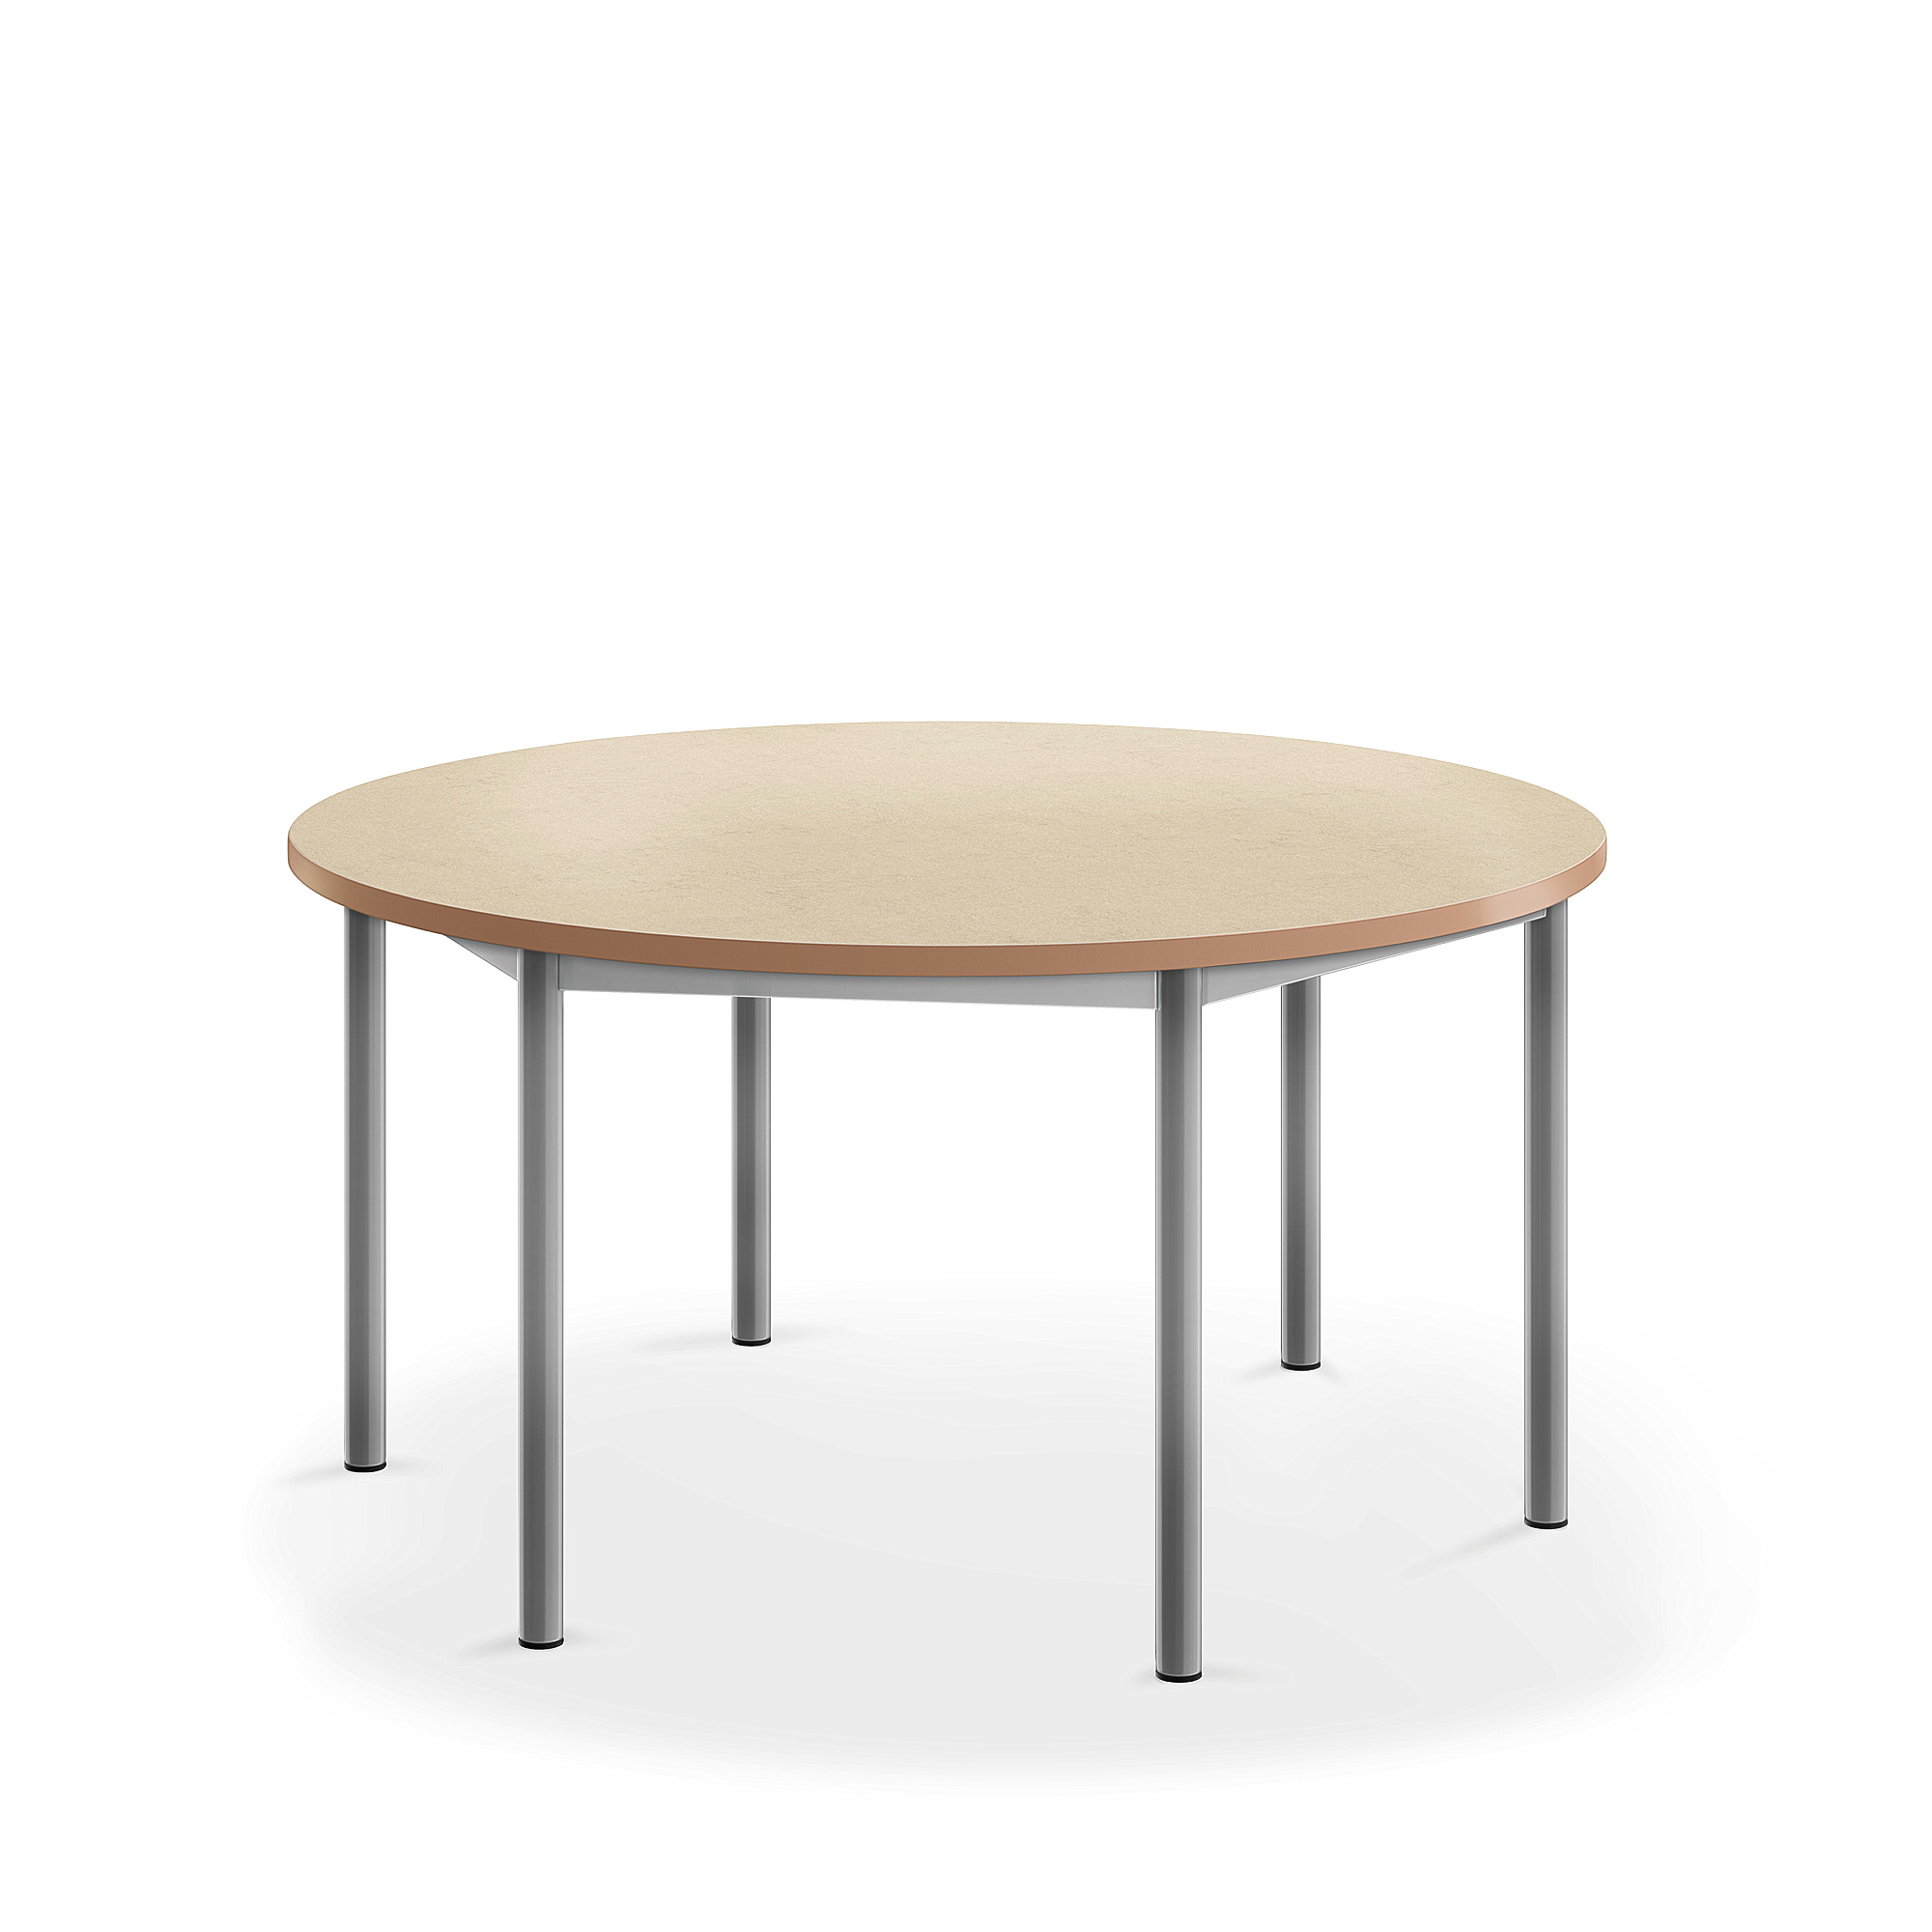 Stůl SONITUS, Ø1200x600 mm, stříbrné nohy, deska s linoleem, béžová